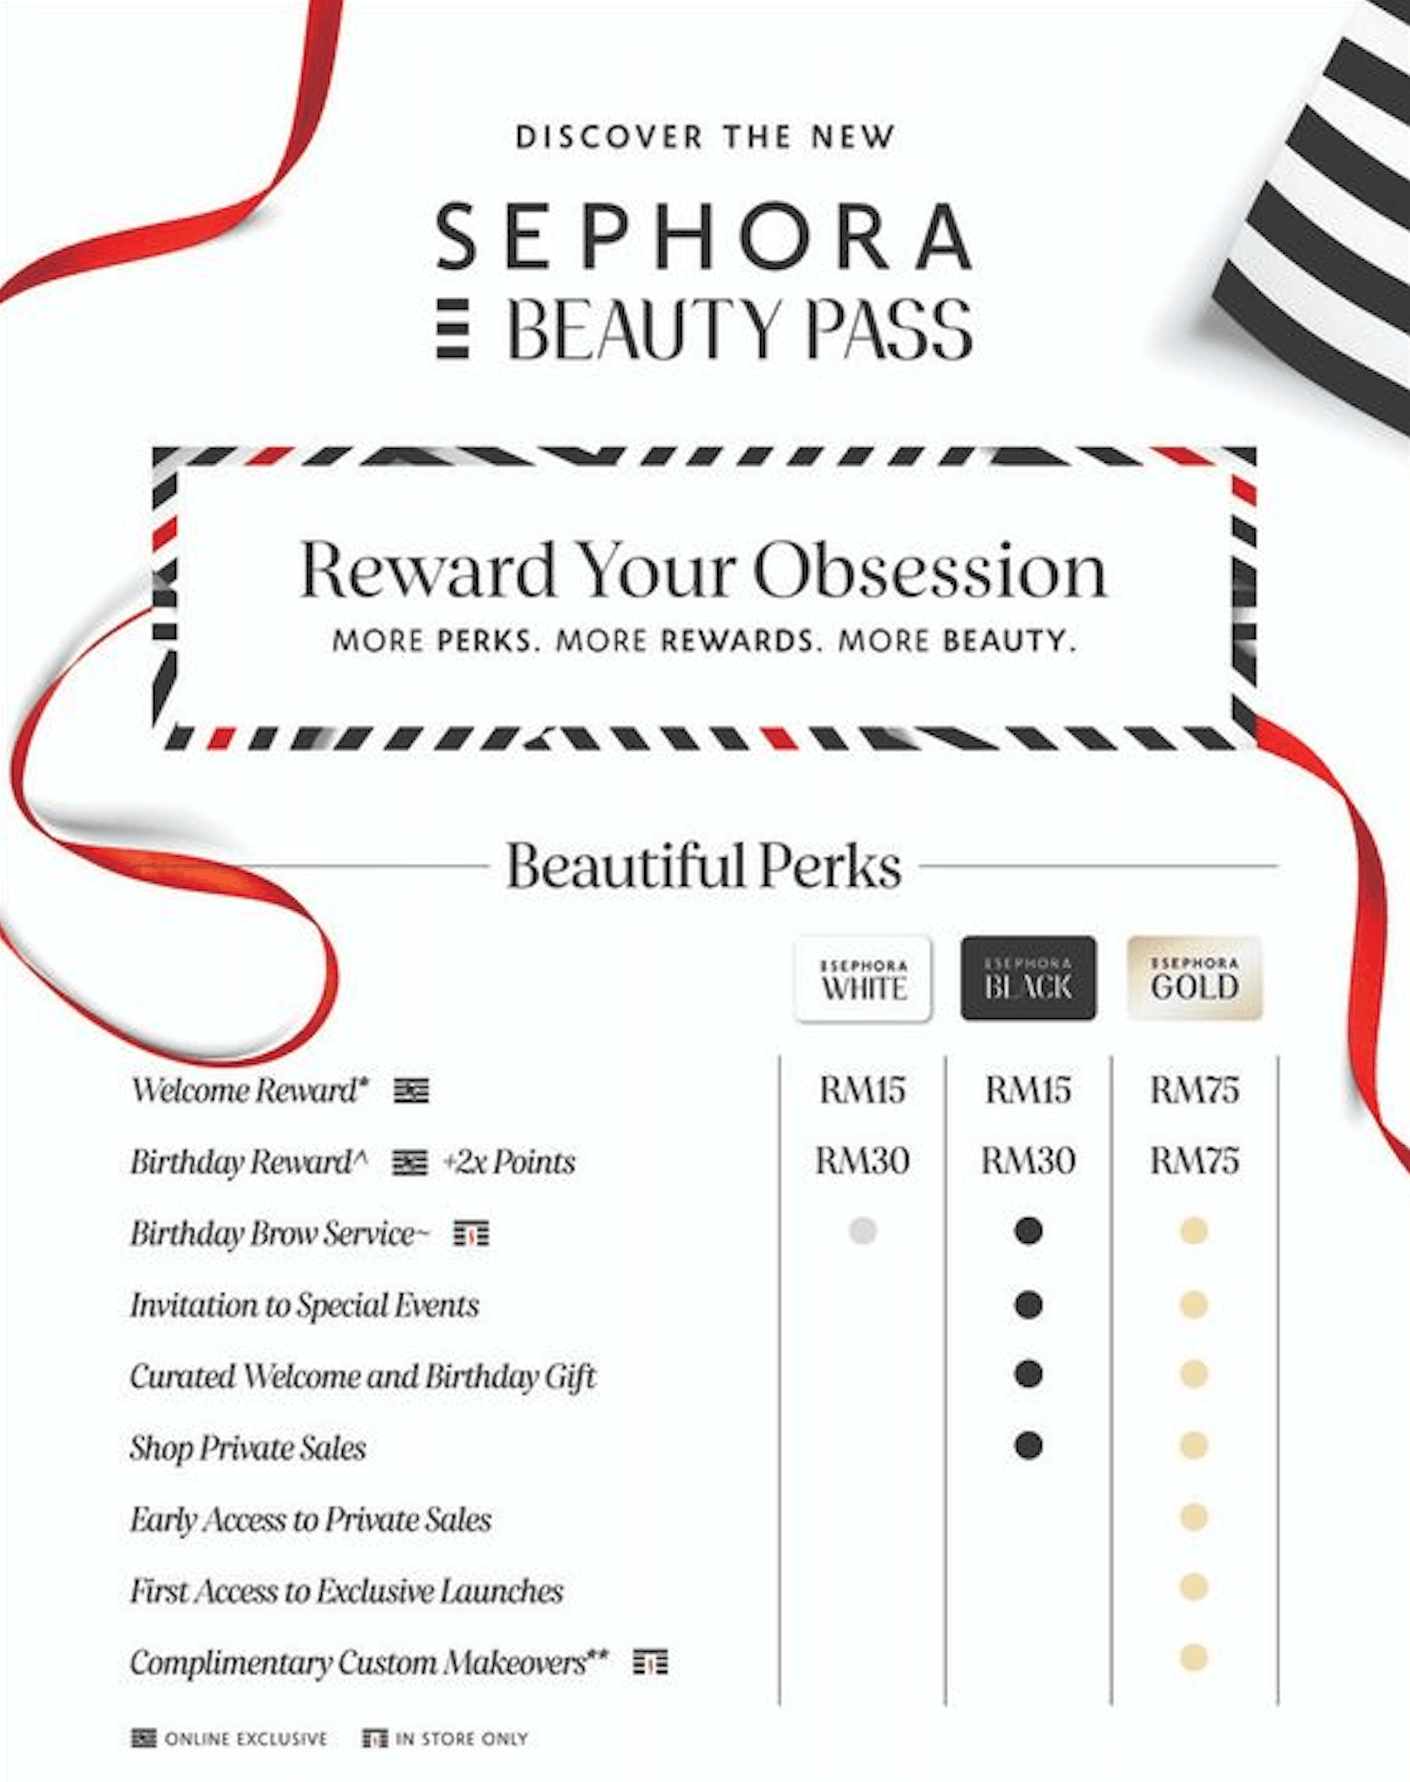 Sephora_reward_program